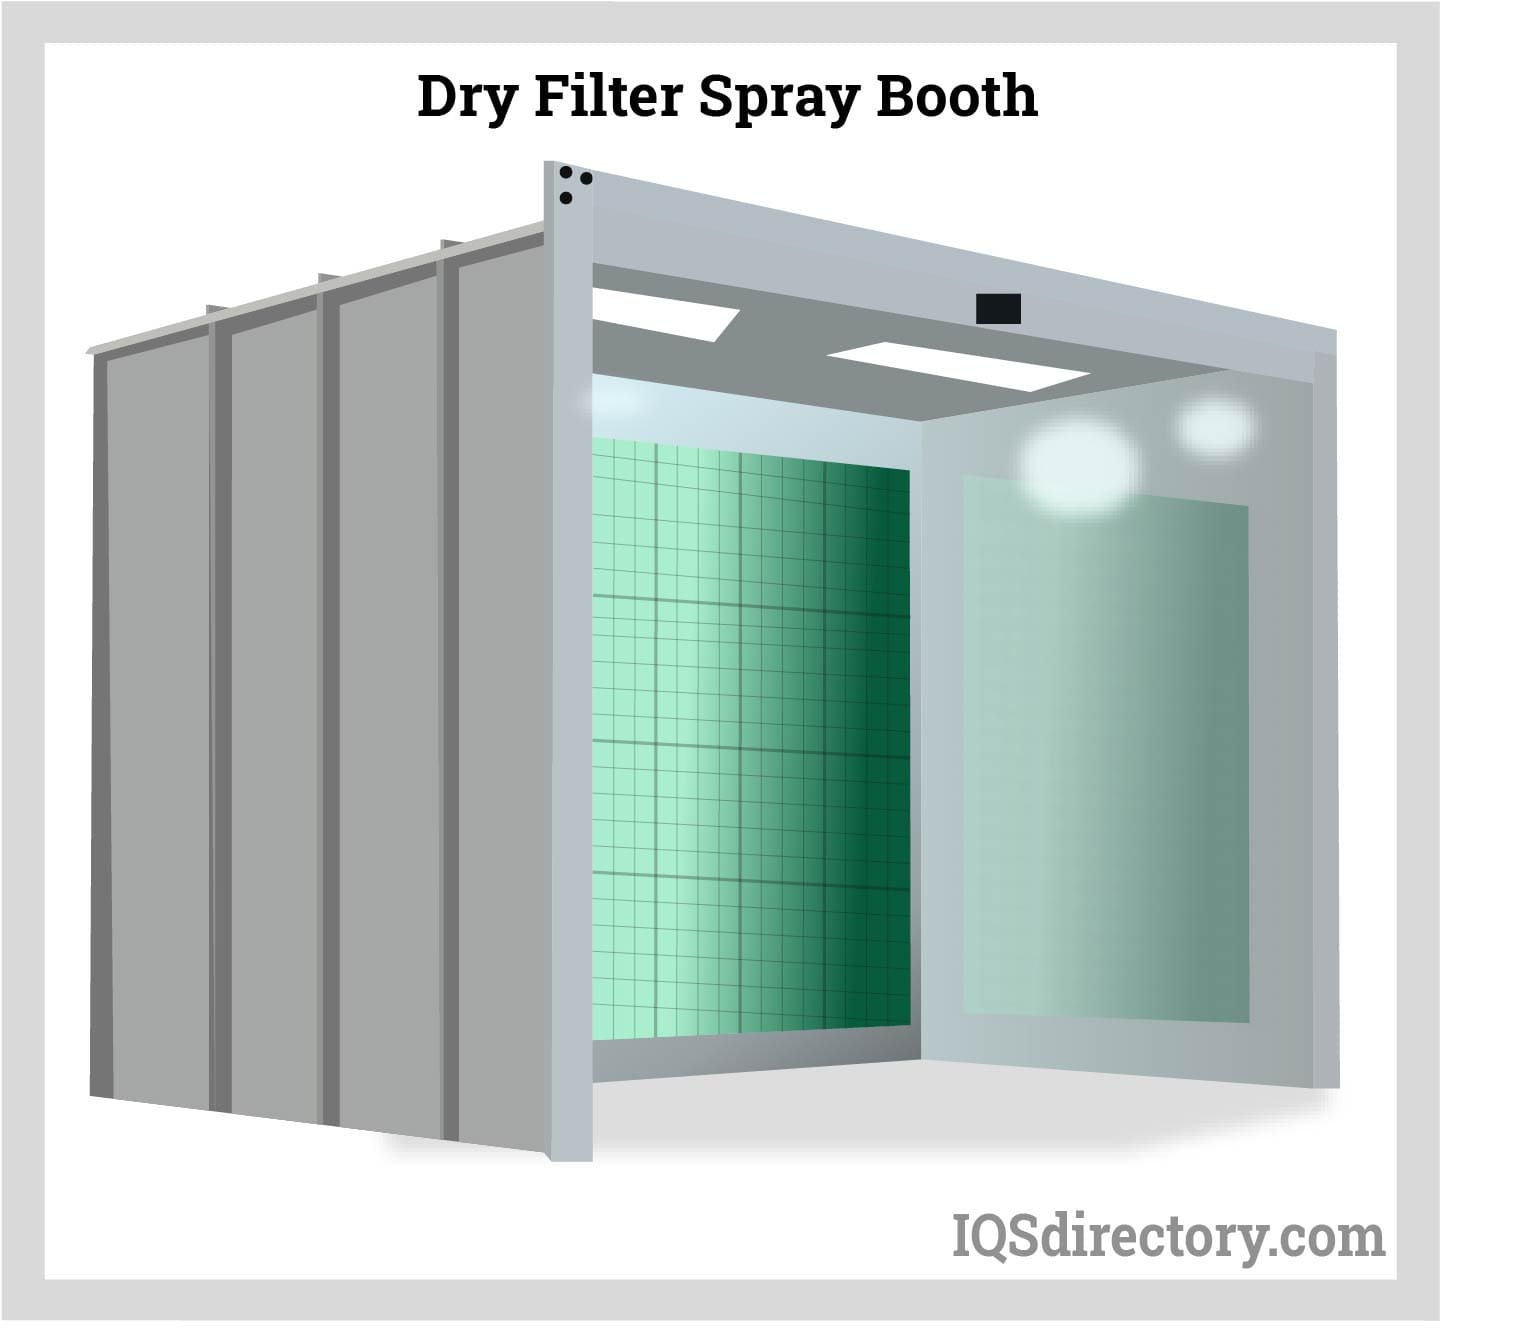 Dry Filter Spray Booth